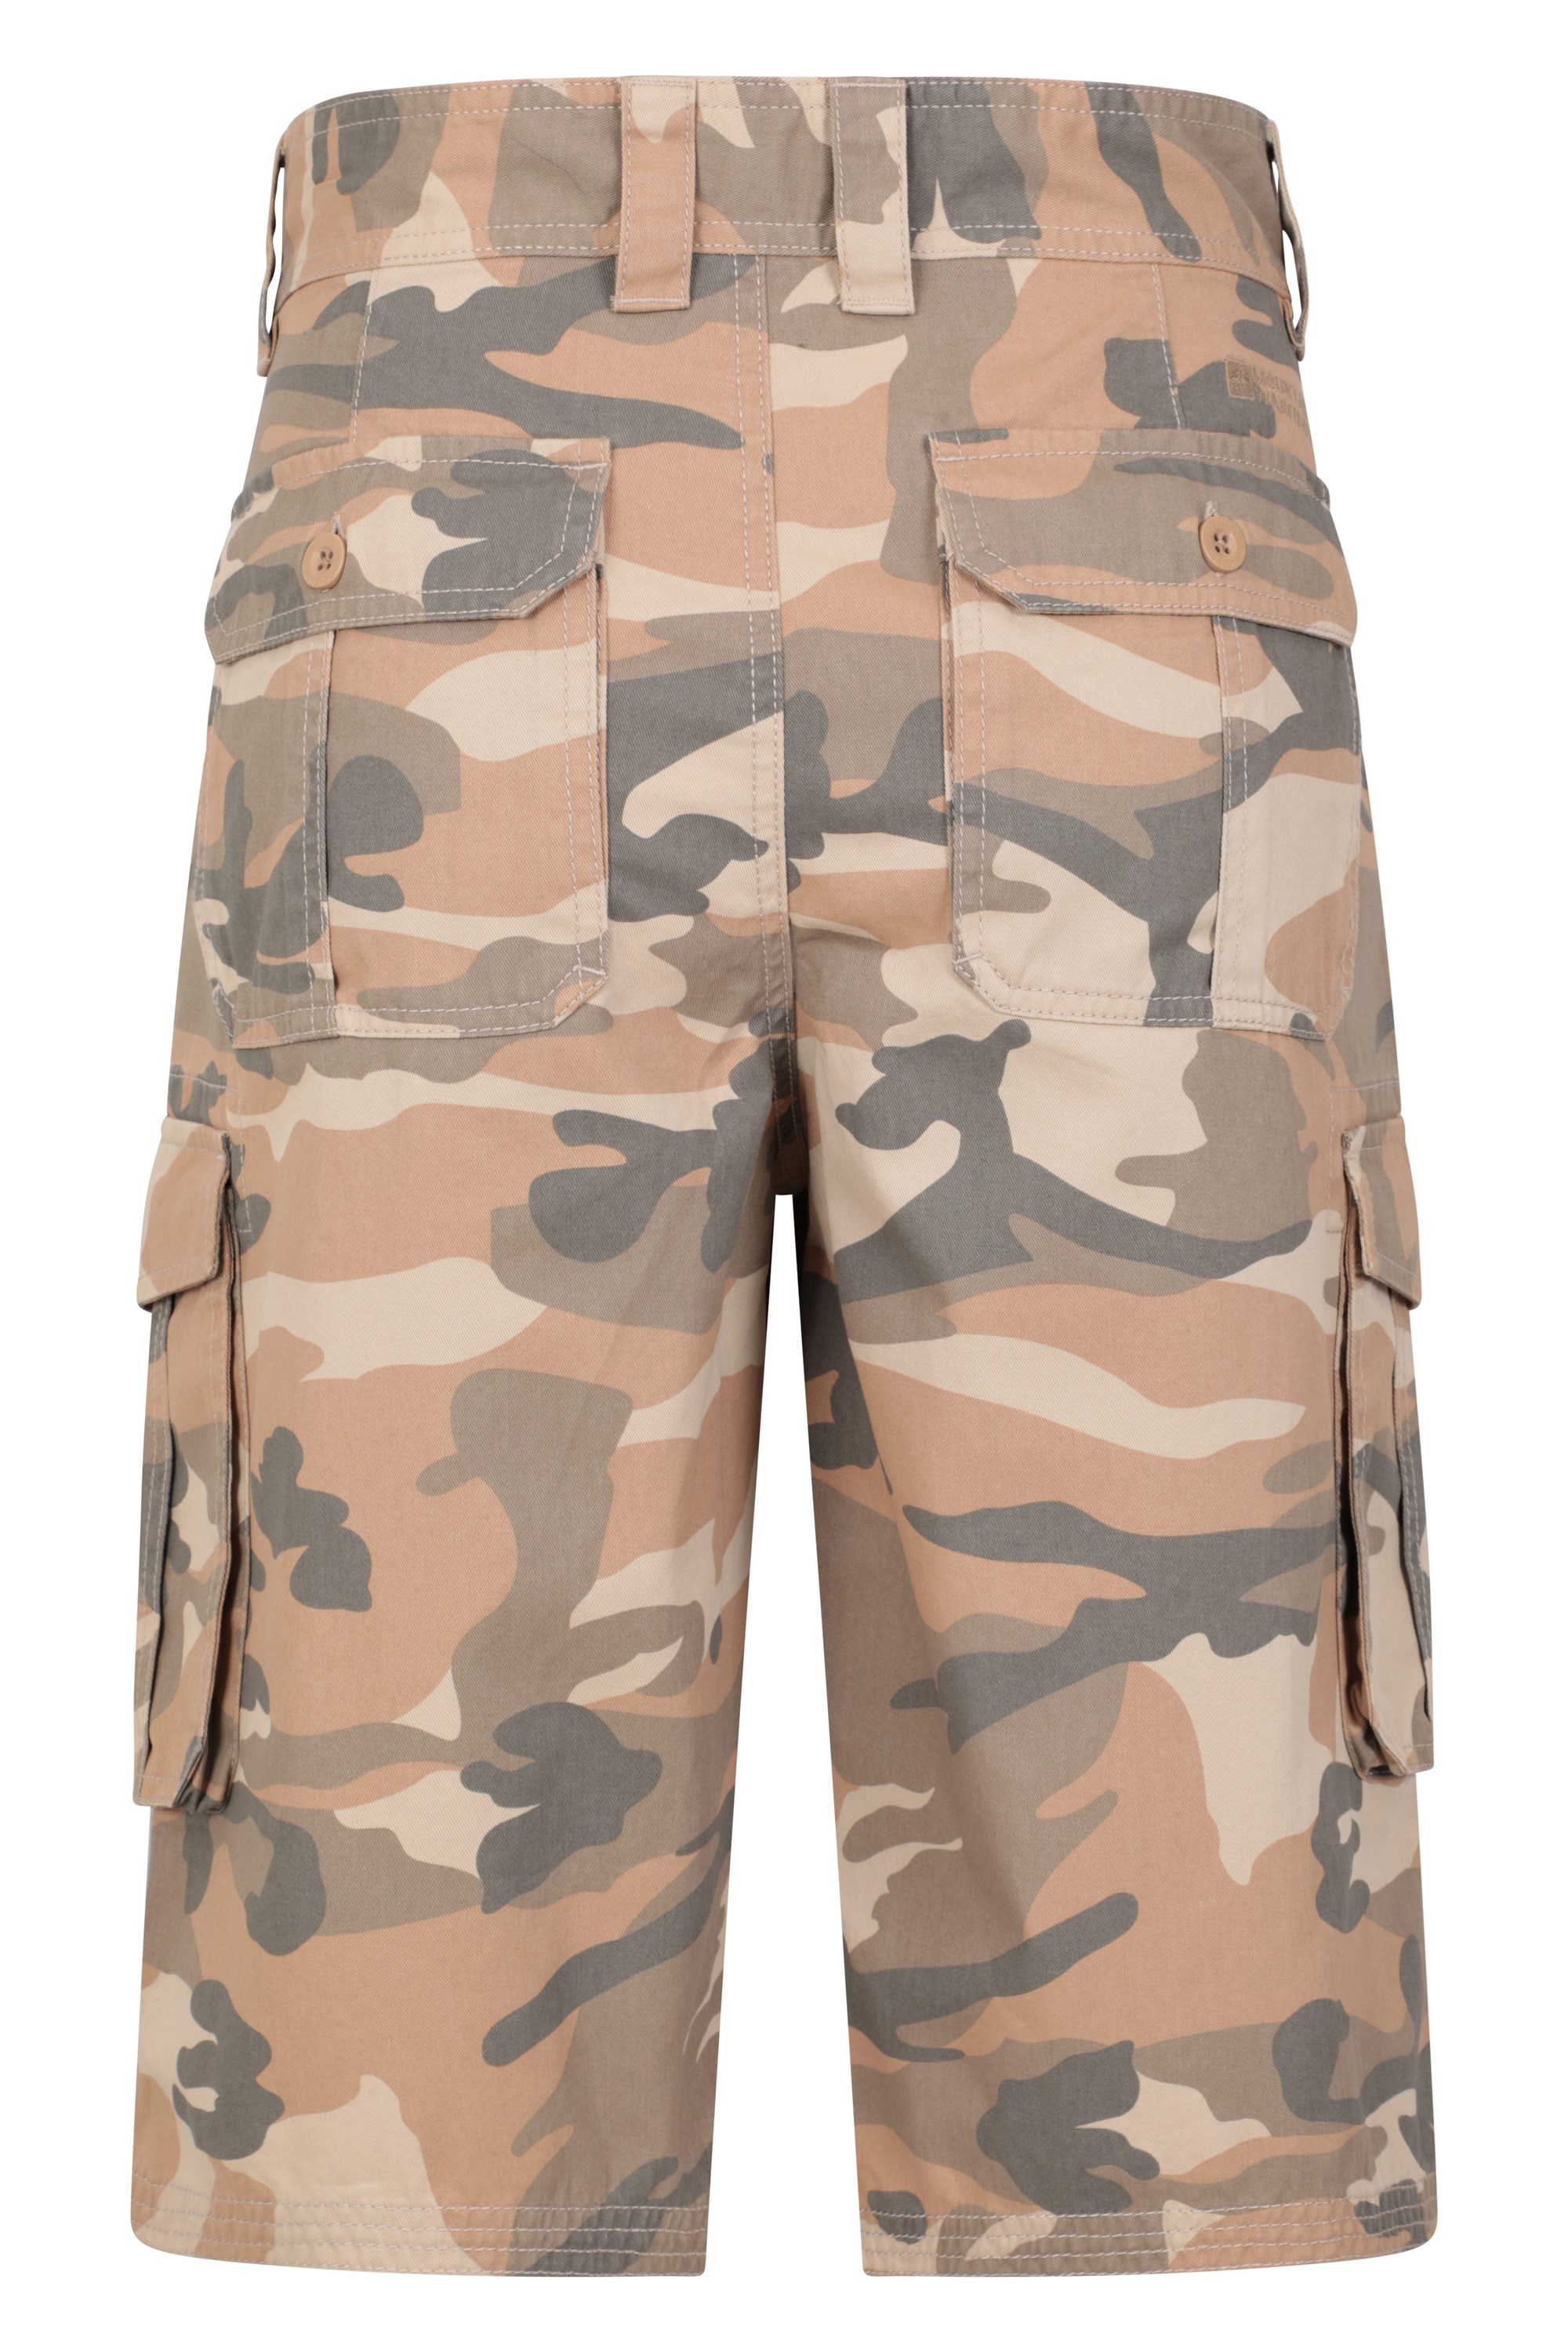 Men's Core Cargo Shorts in Desert Camo